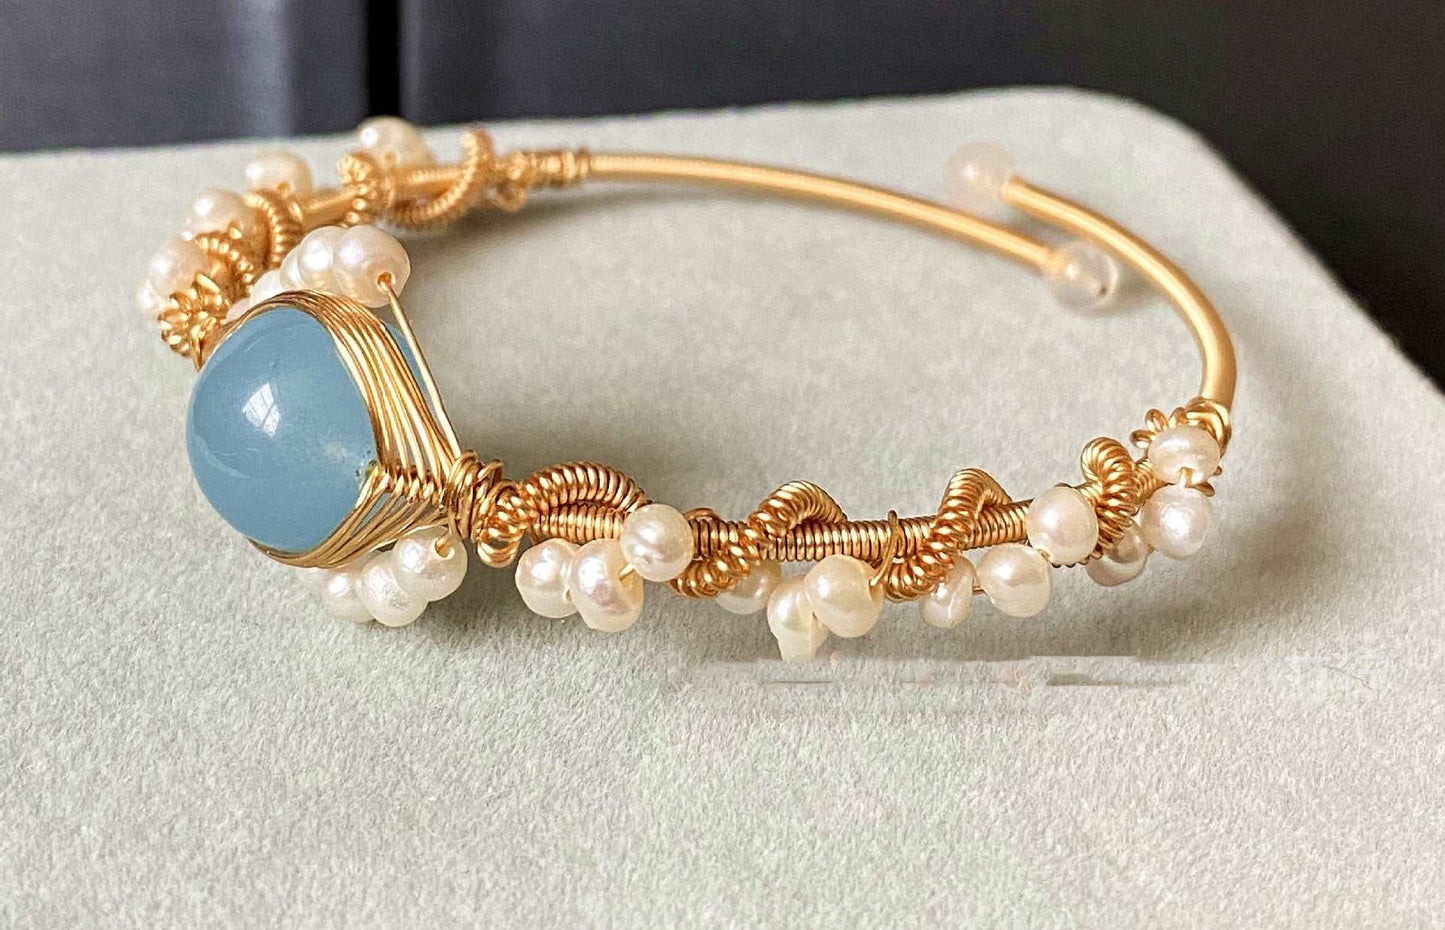 14K GoldWrapped Handmade Bracelet Hailan Baohai Sapphire Natural White Pearl Bracelet - Jps collections